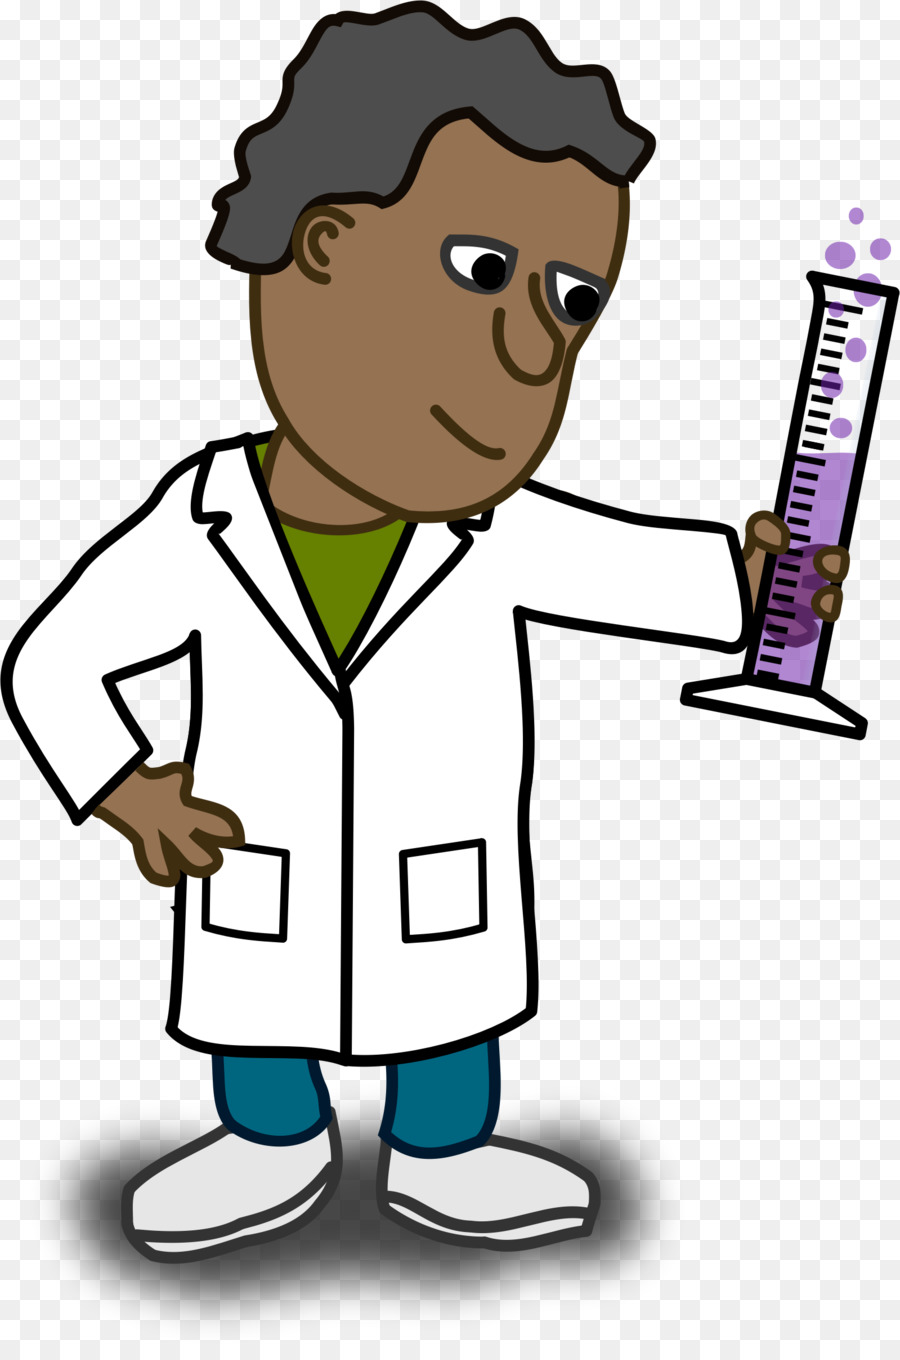 Scientist Cartoon